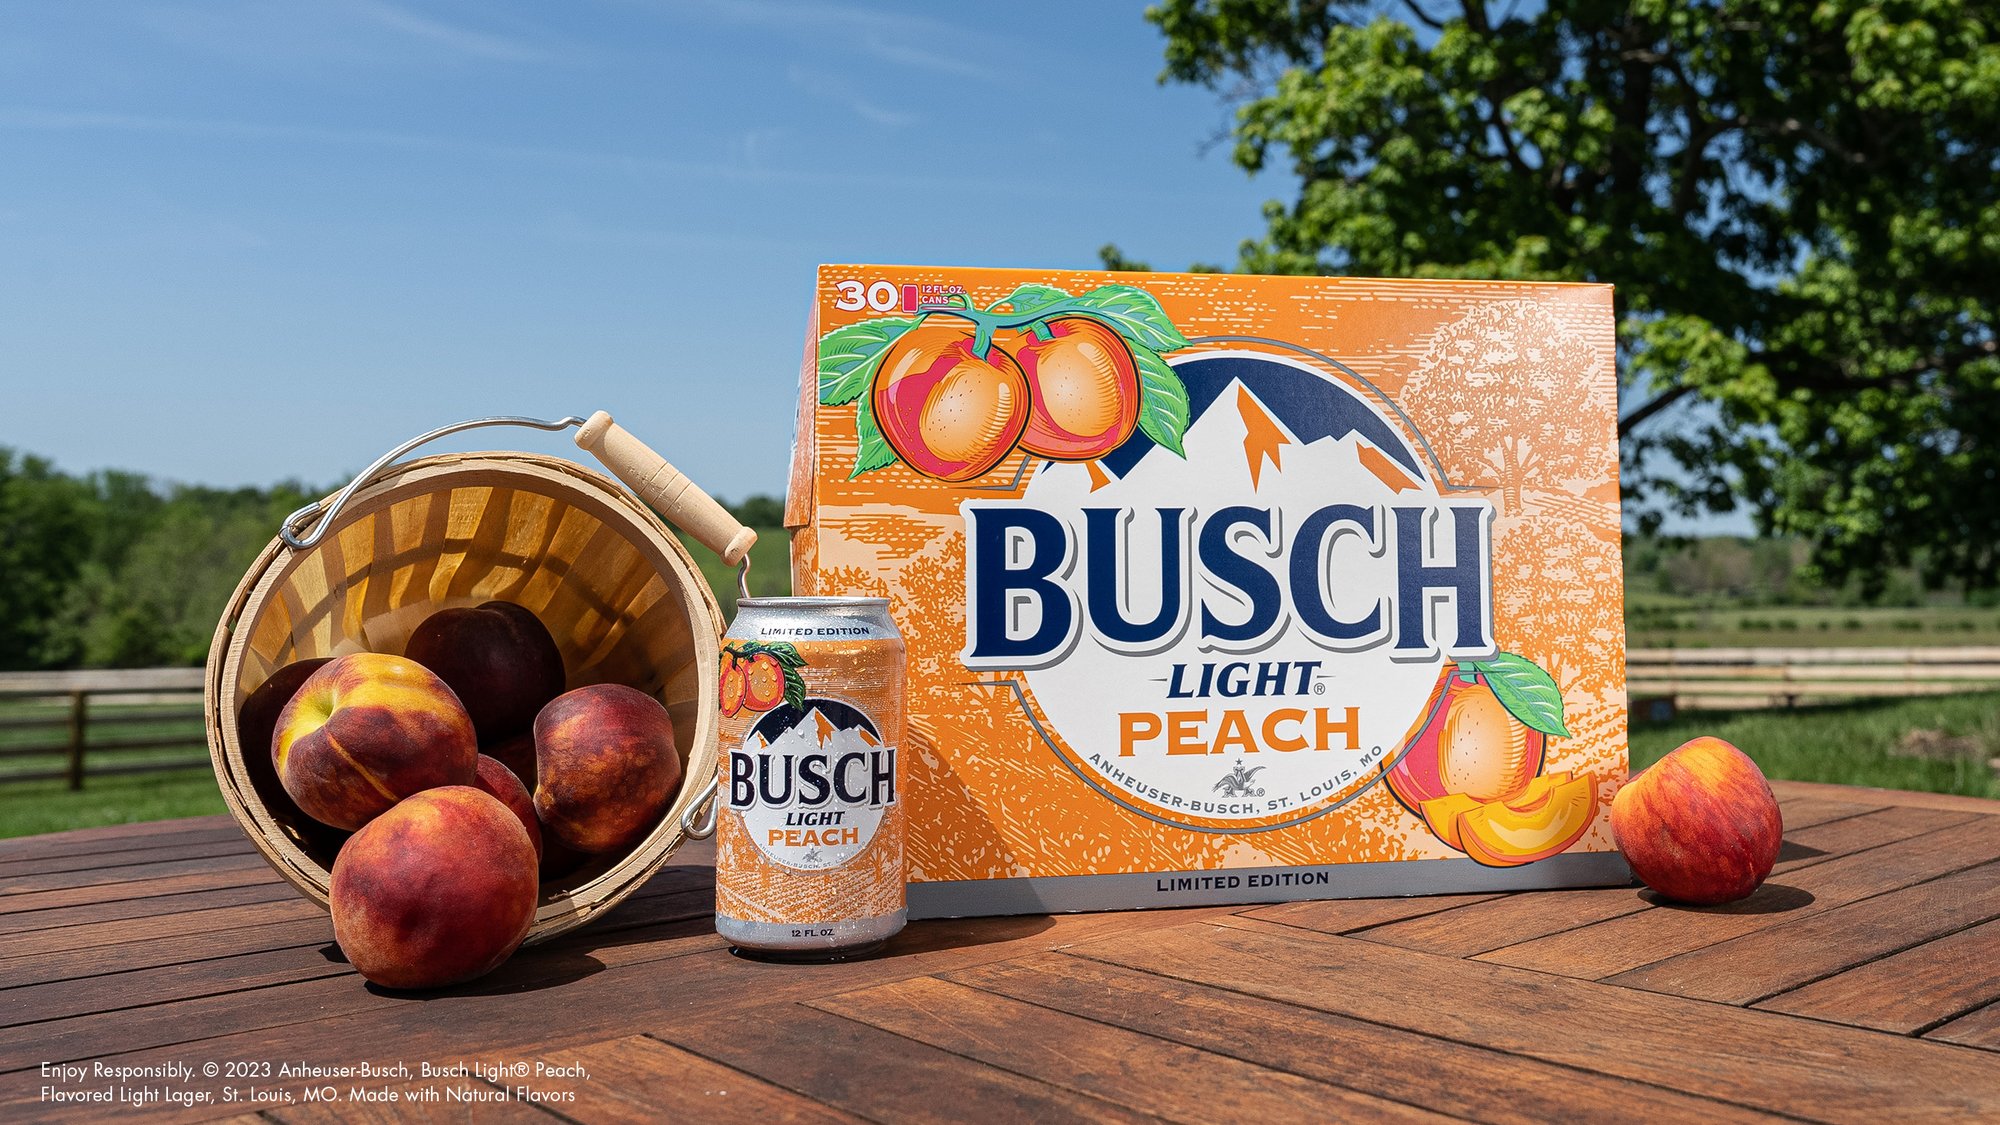 Busch Light Introduces New Limited-Edition Lager: Busch Light Peach